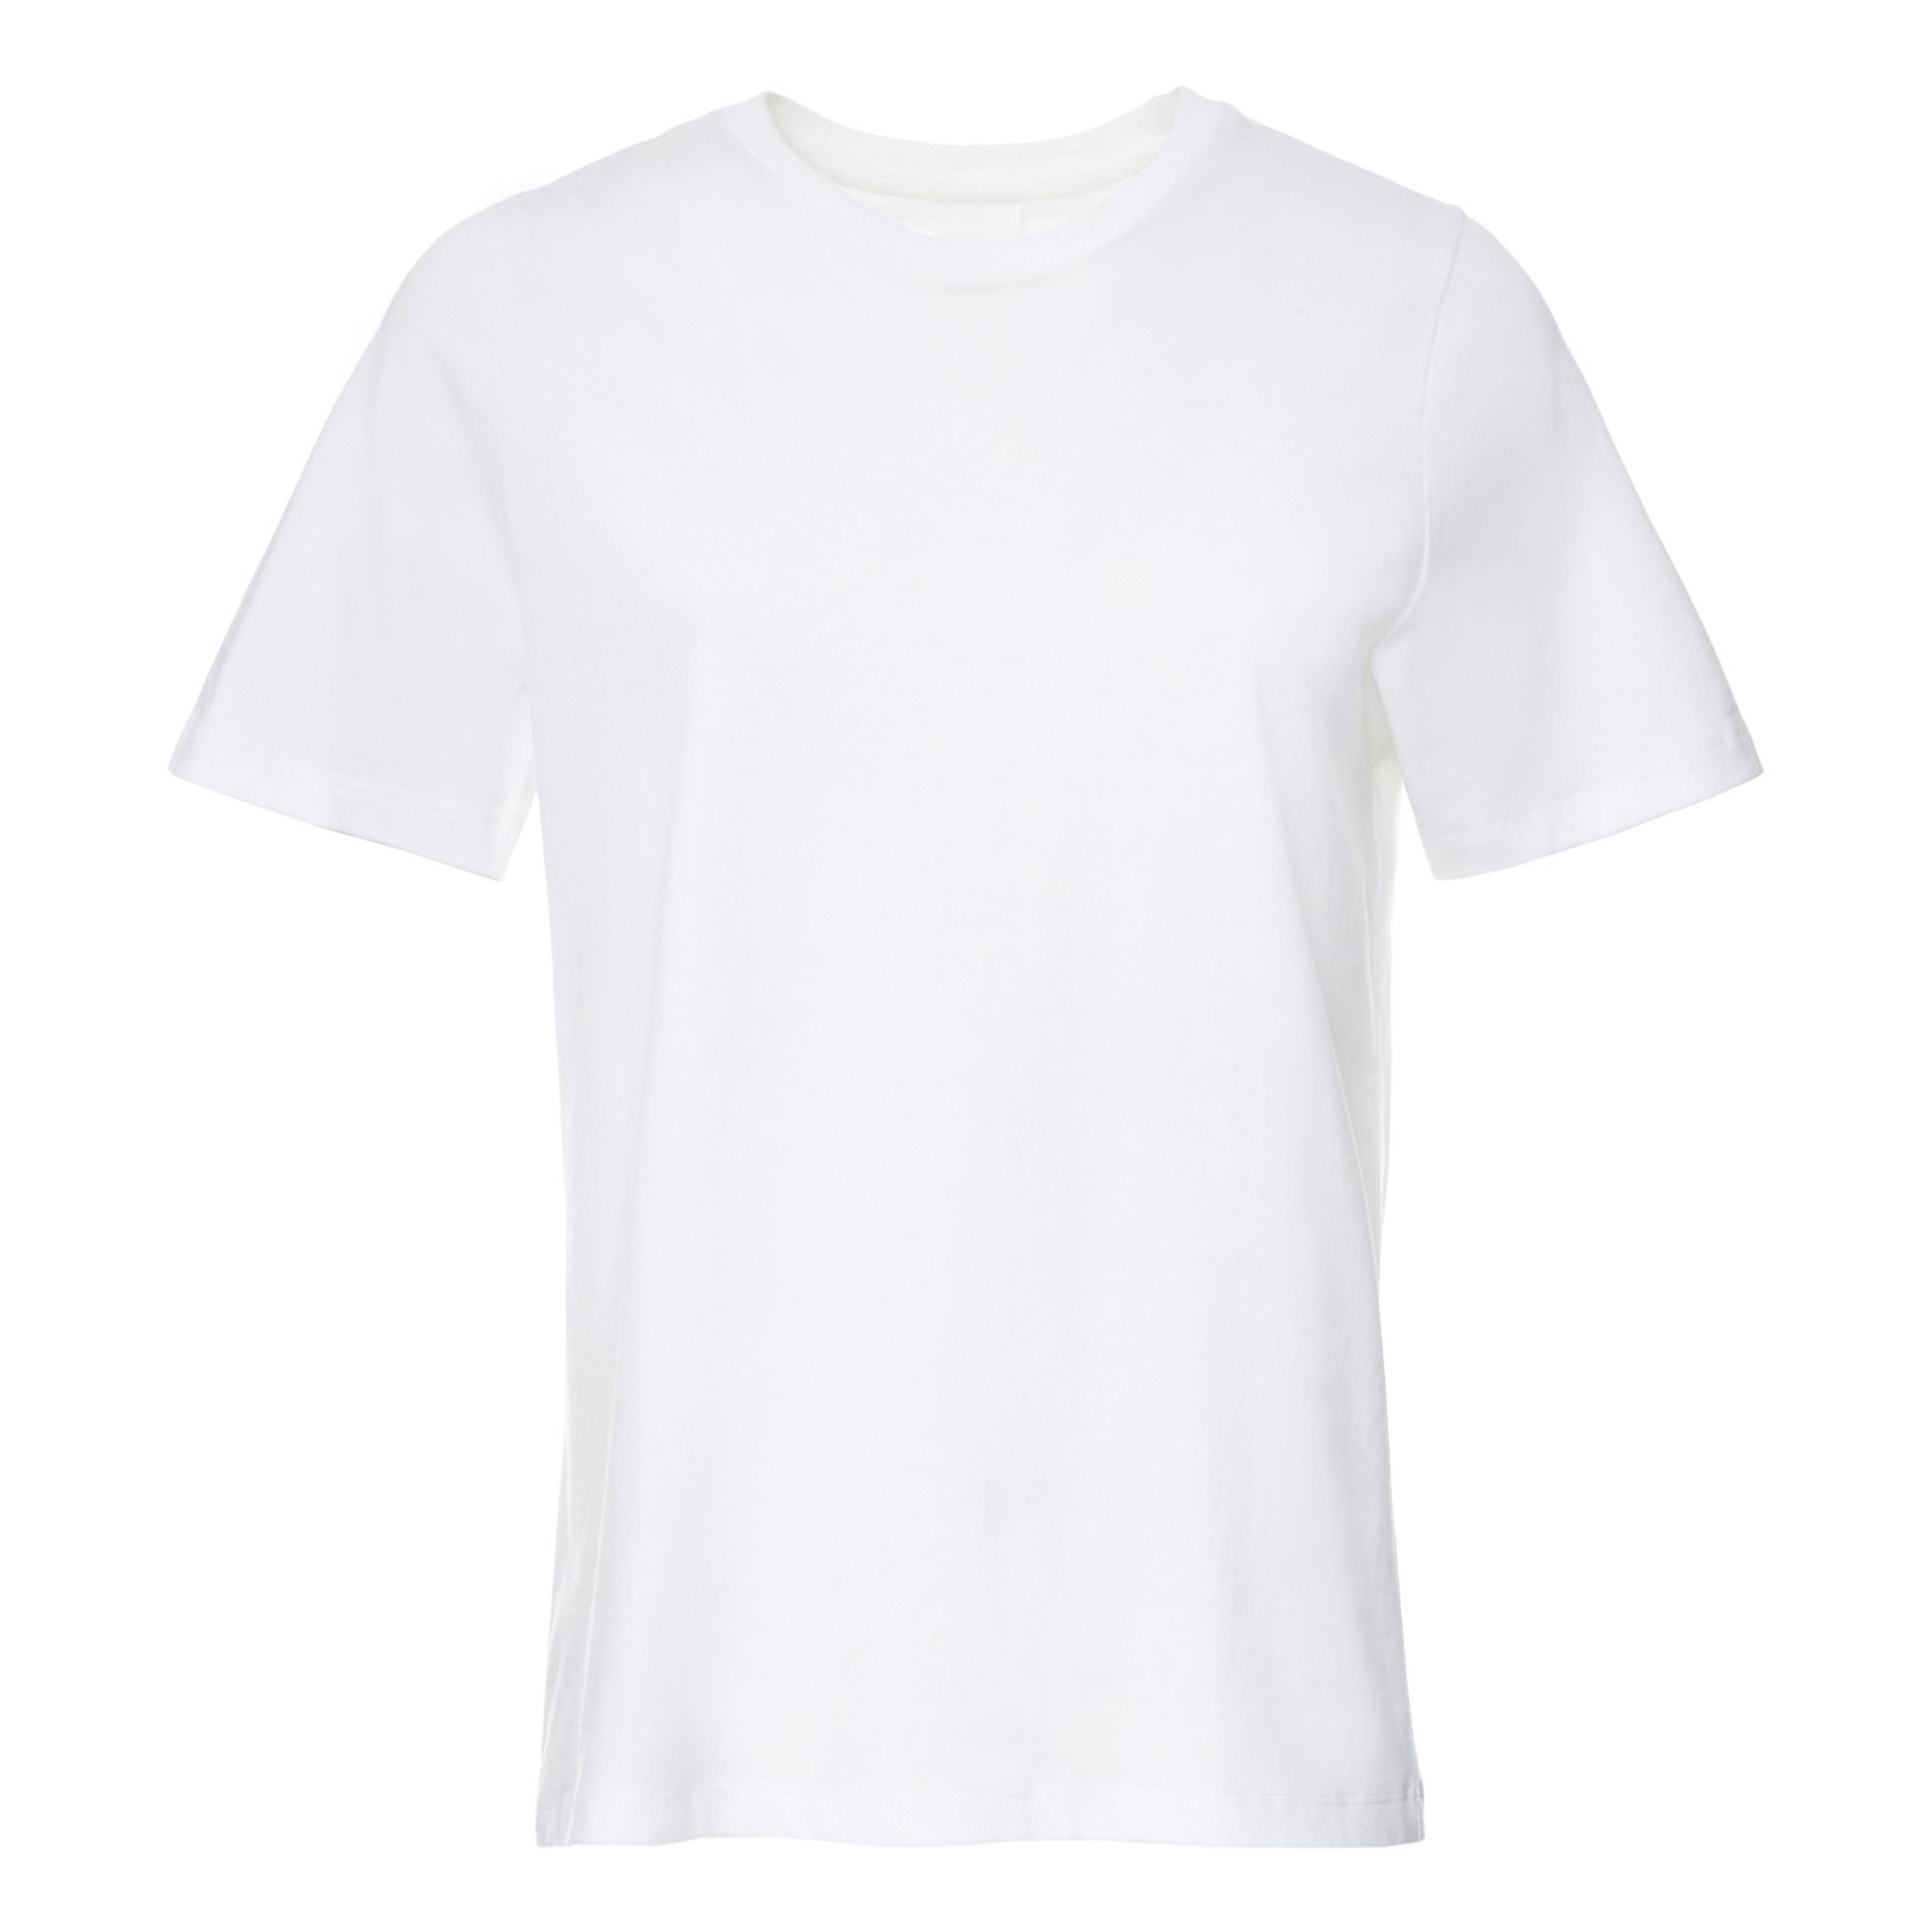 Kowtow - T-Shirt Classic Coton Bio - Femme - Blanc